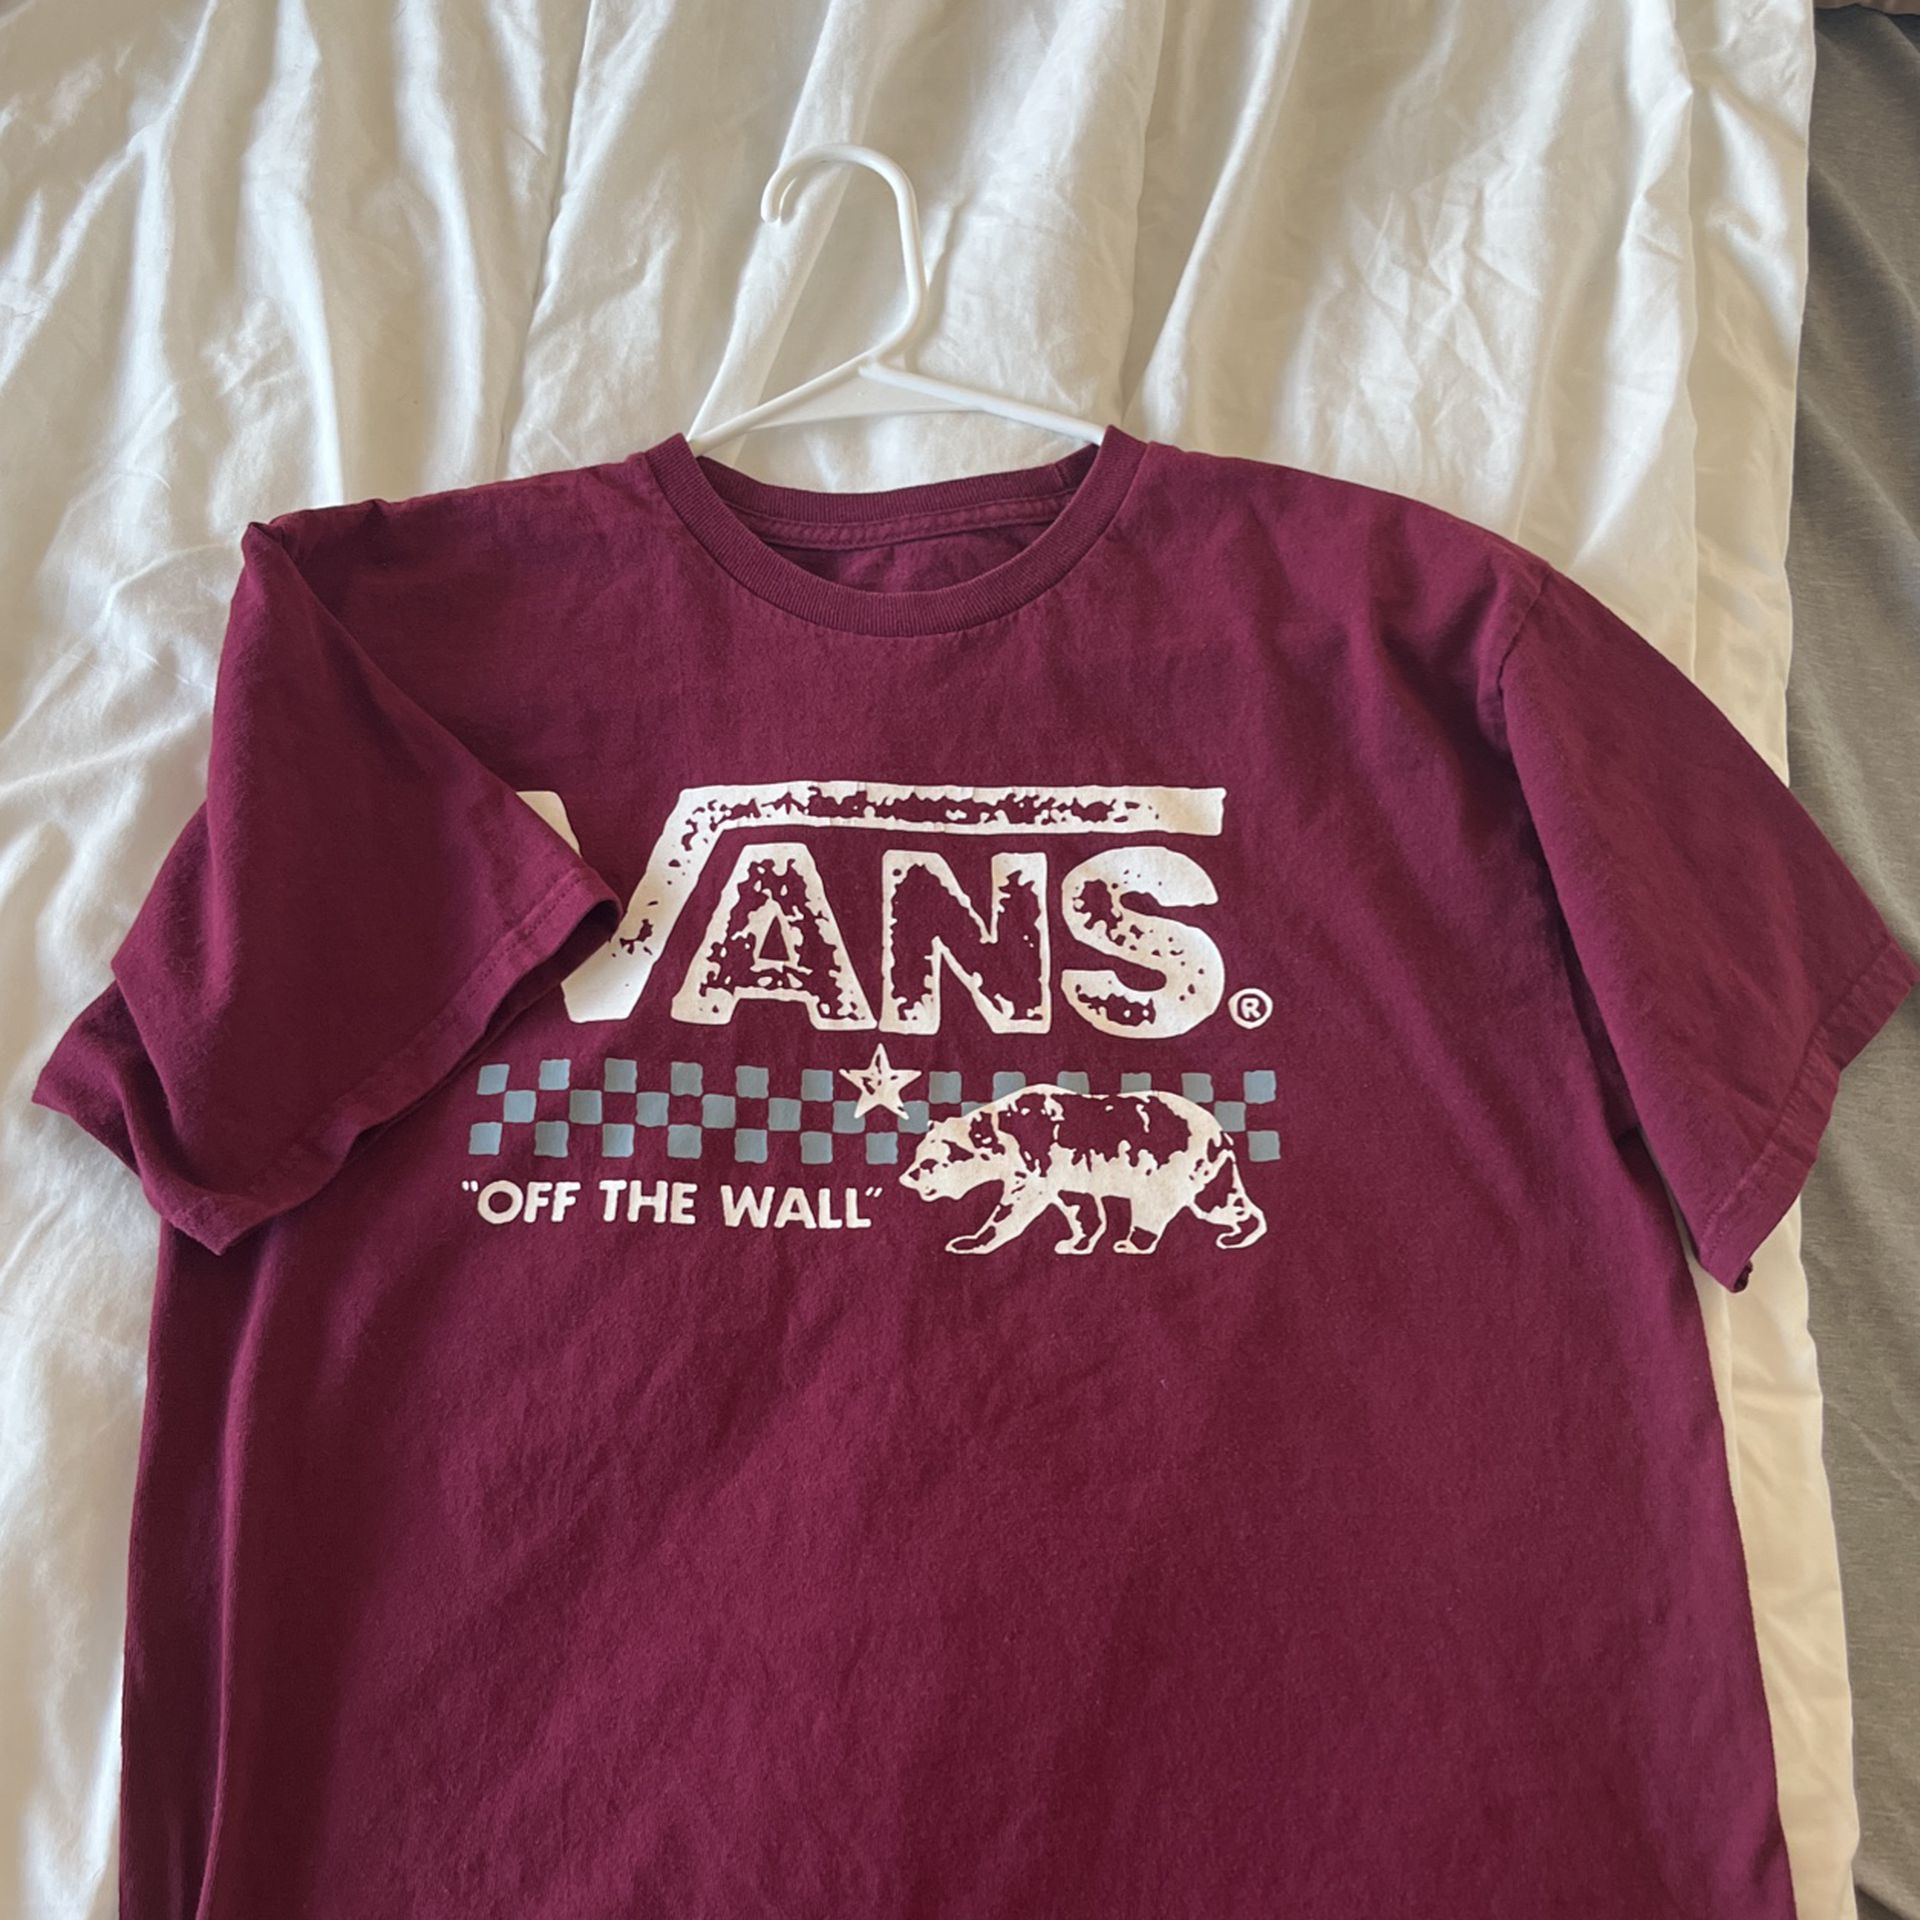 Vans T-shirt 